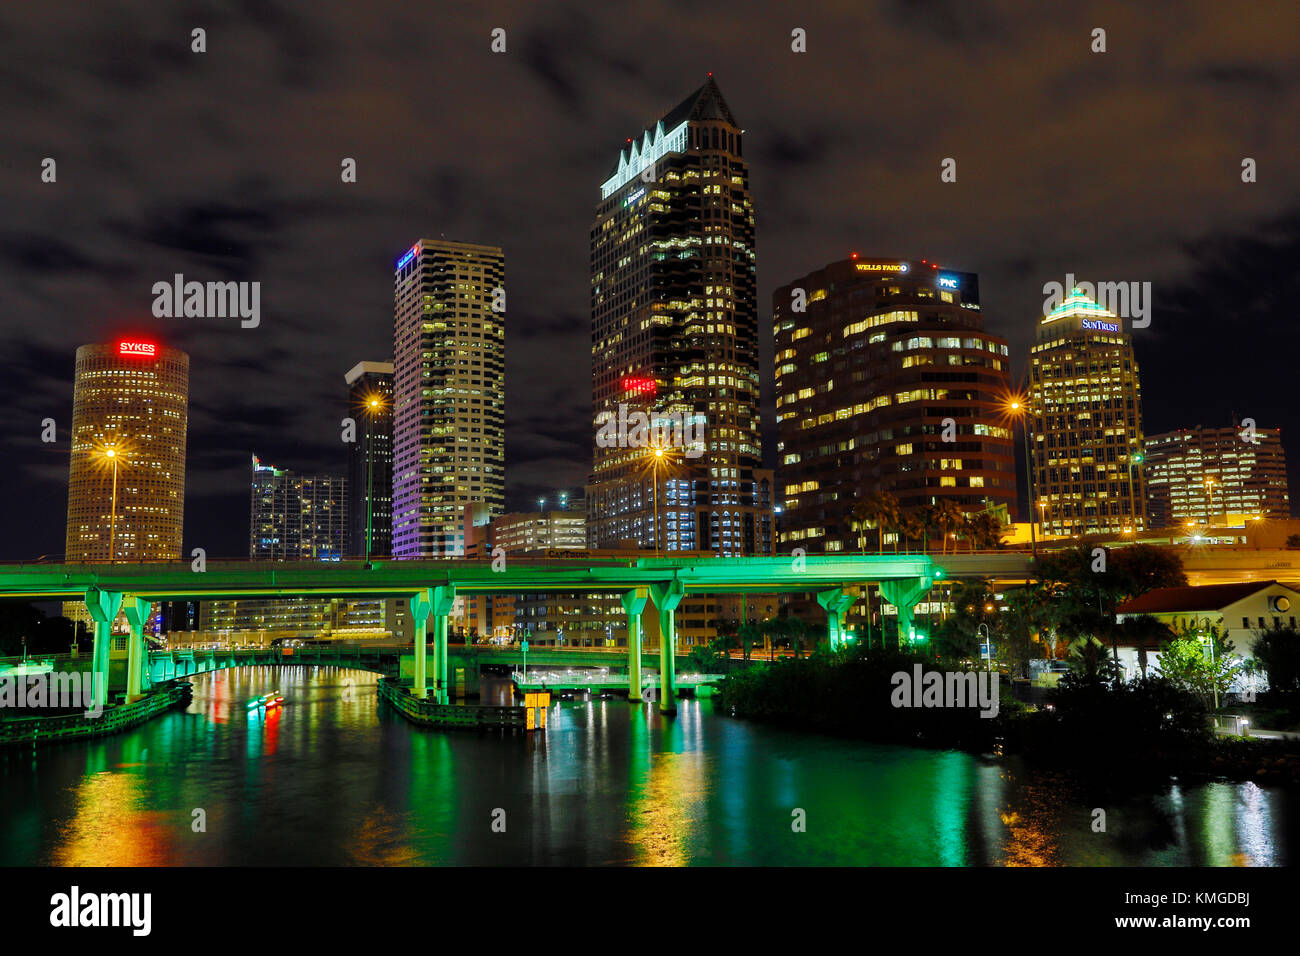 JANUARY 25, 2017: The skyline of Tampa, Florida illuminated at night. Stock Photo